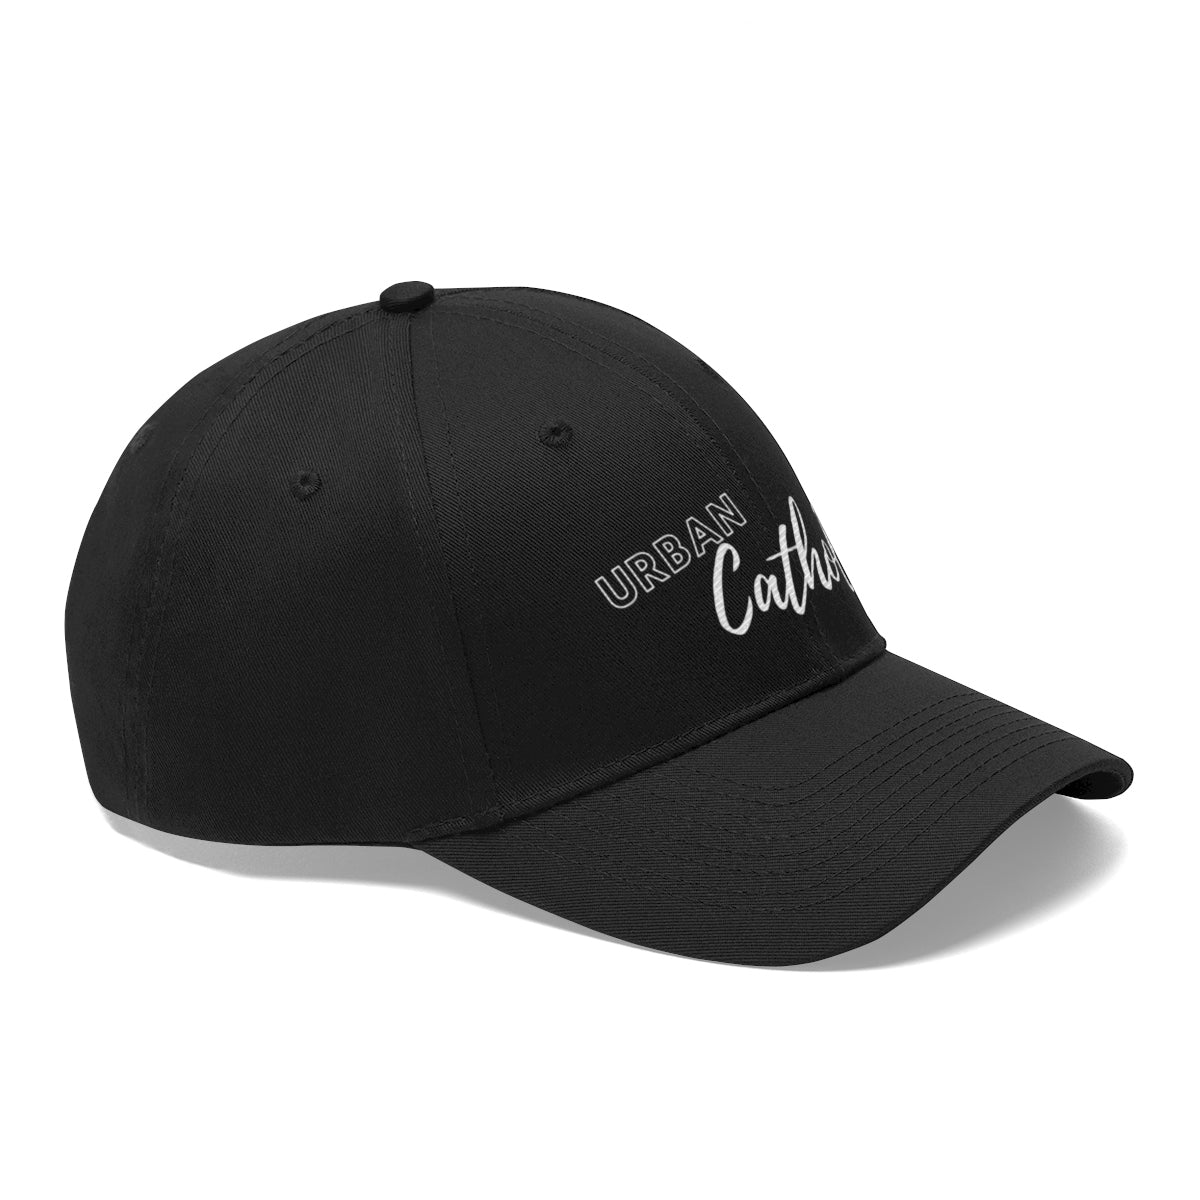 Urban Catholic Twill Hat